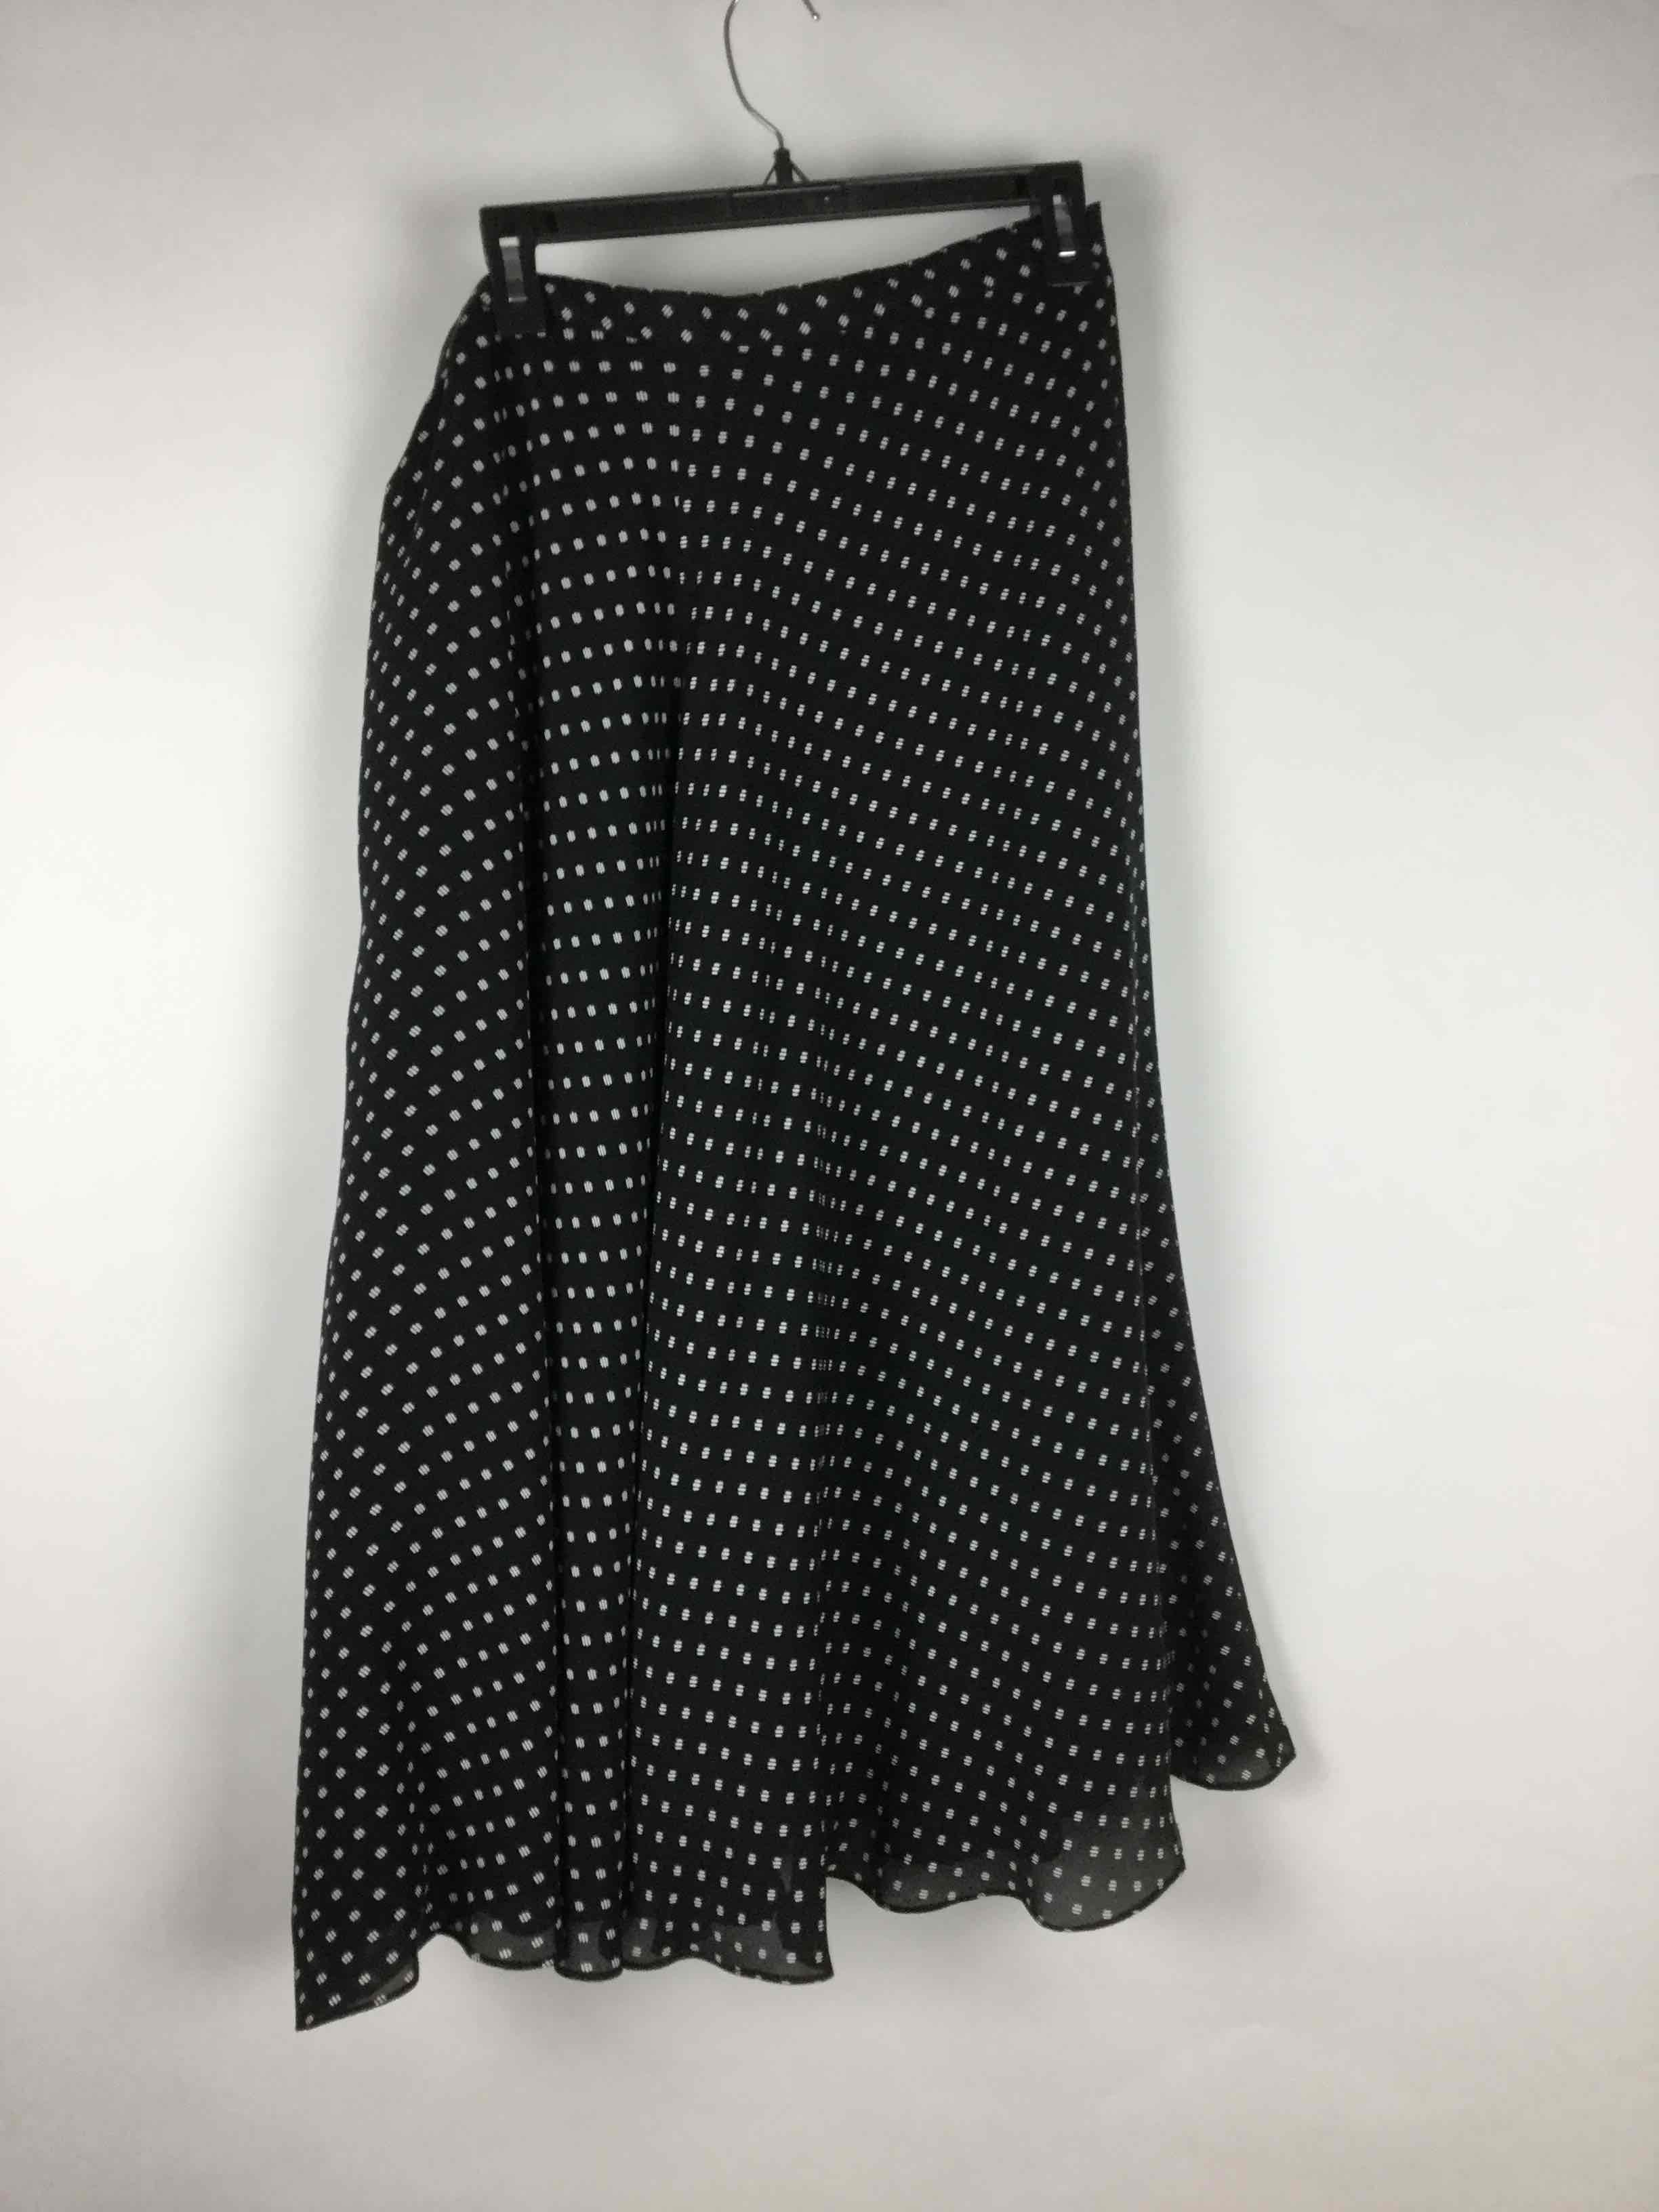 Jones New York Black White Petite Silk Maxi Skirt Size 14P | eBay